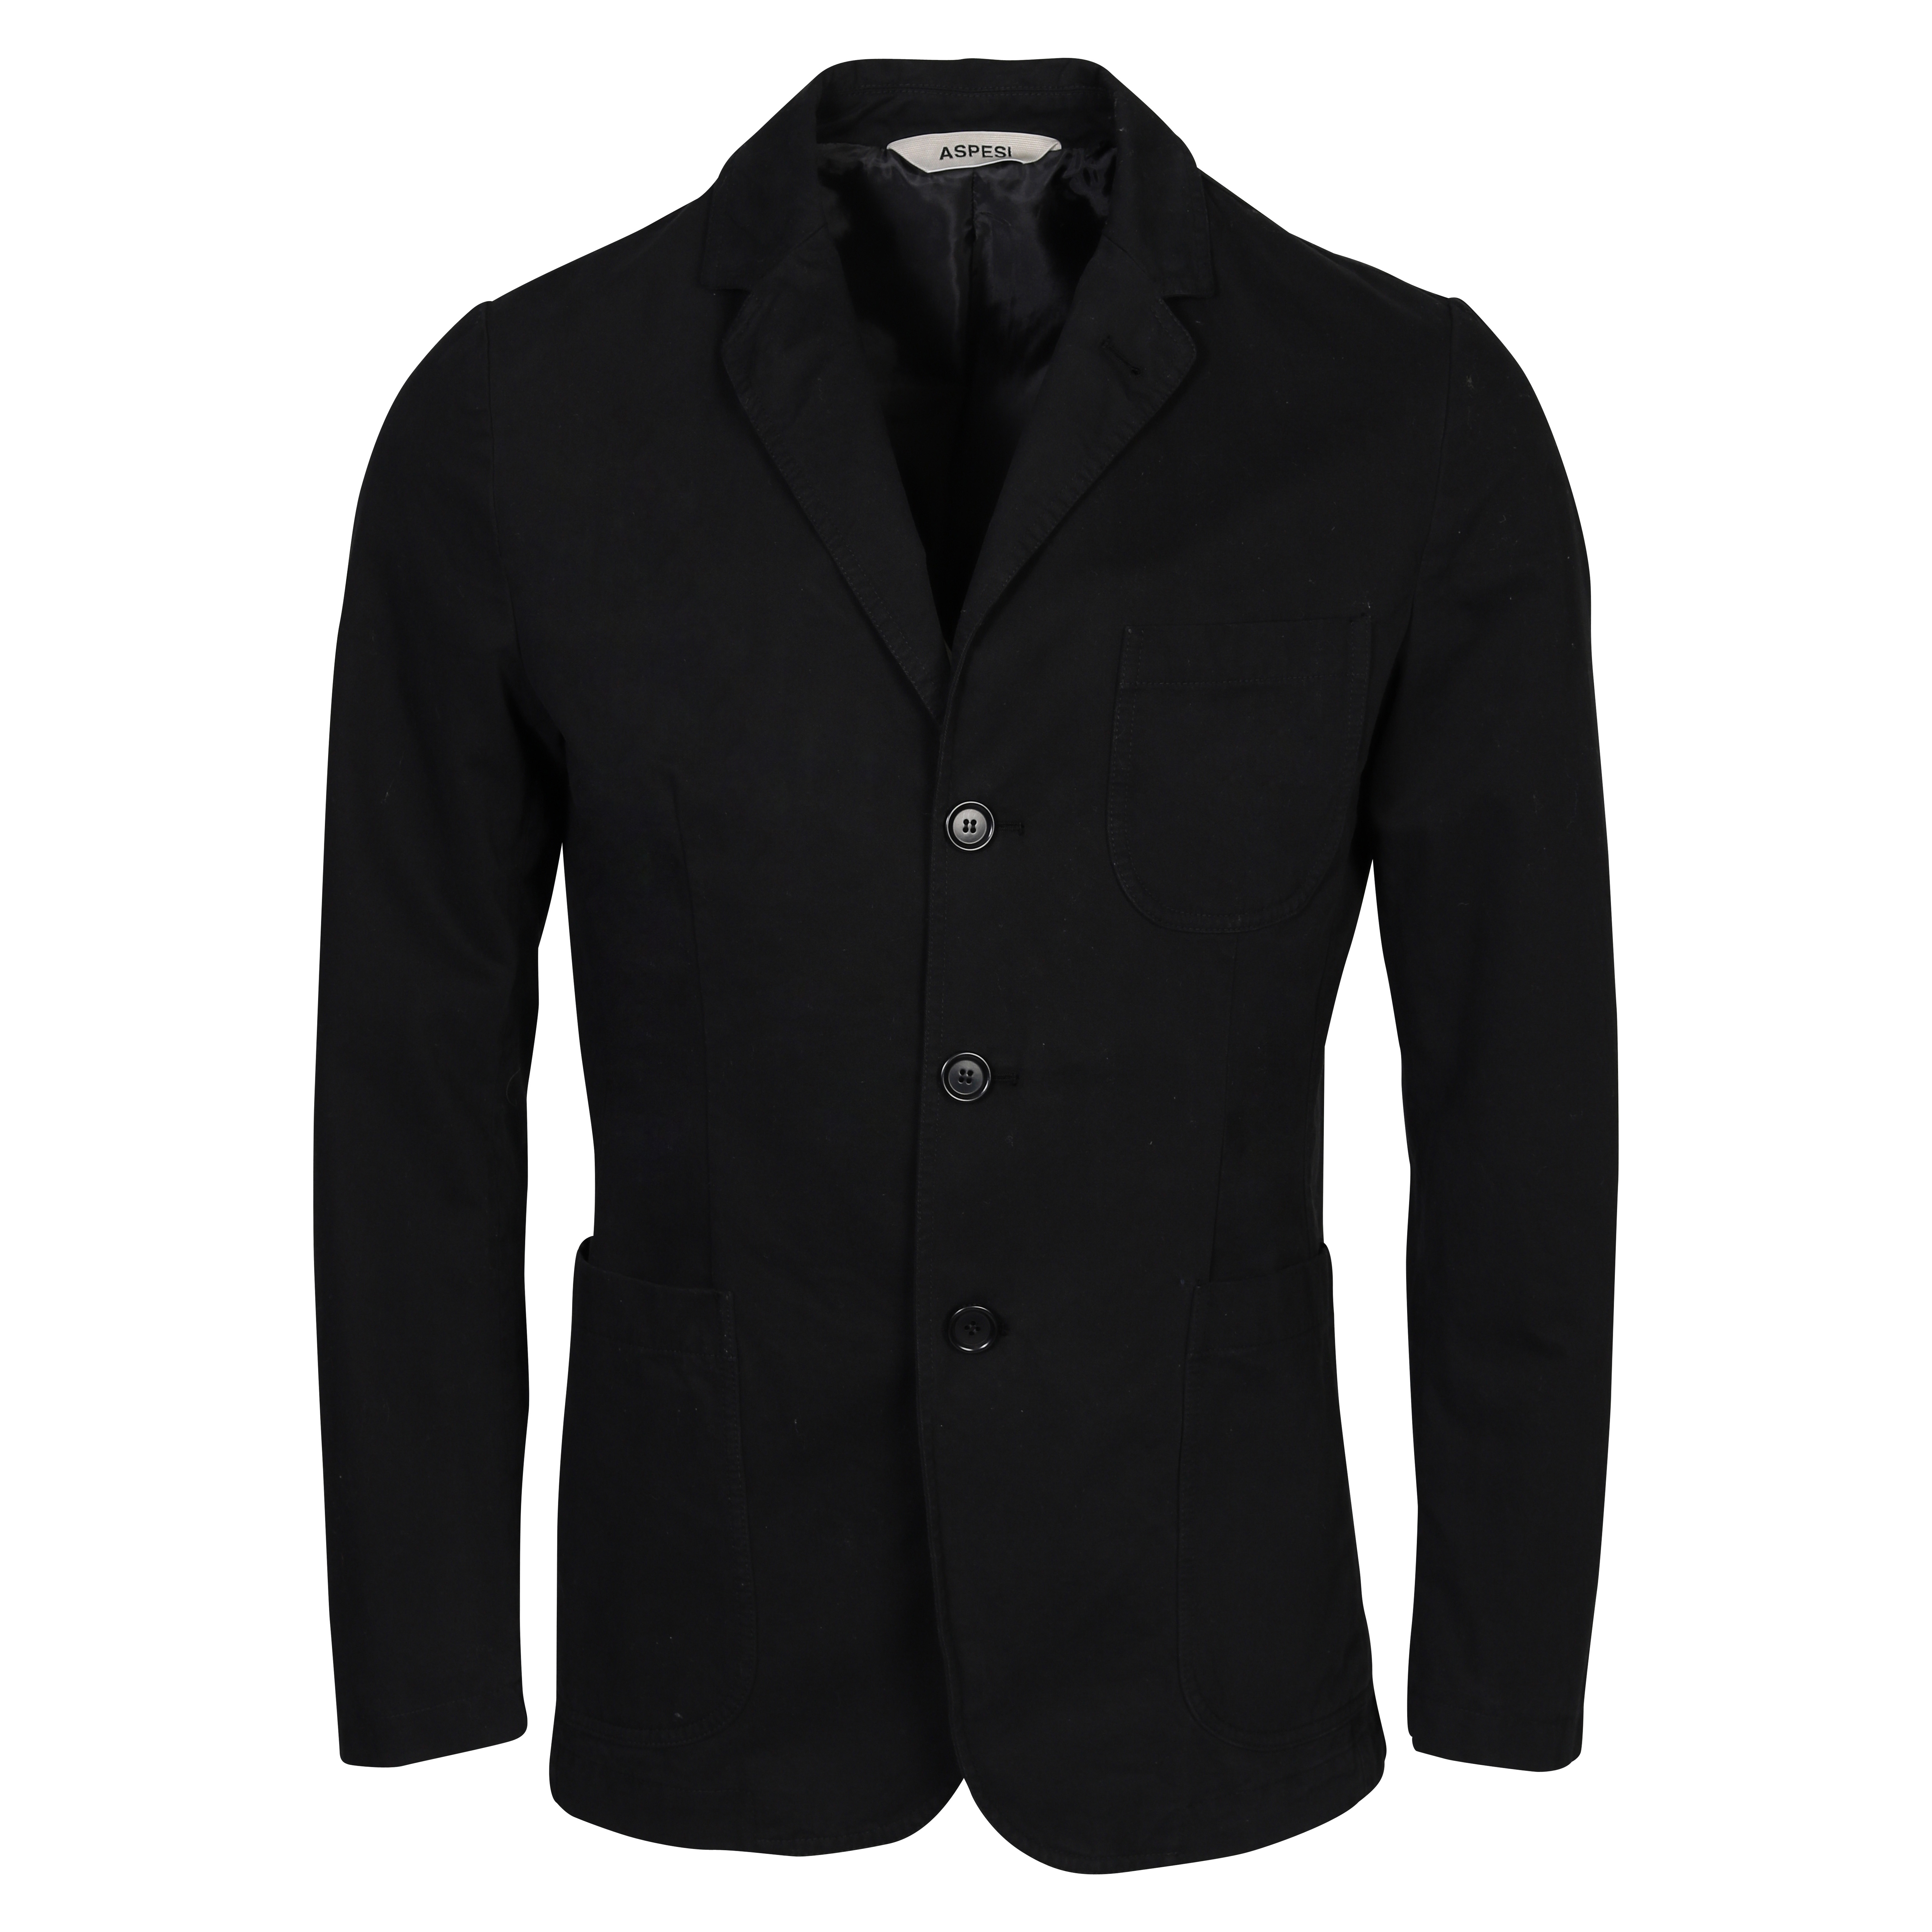 Aspesi Cotton Jacket in Black